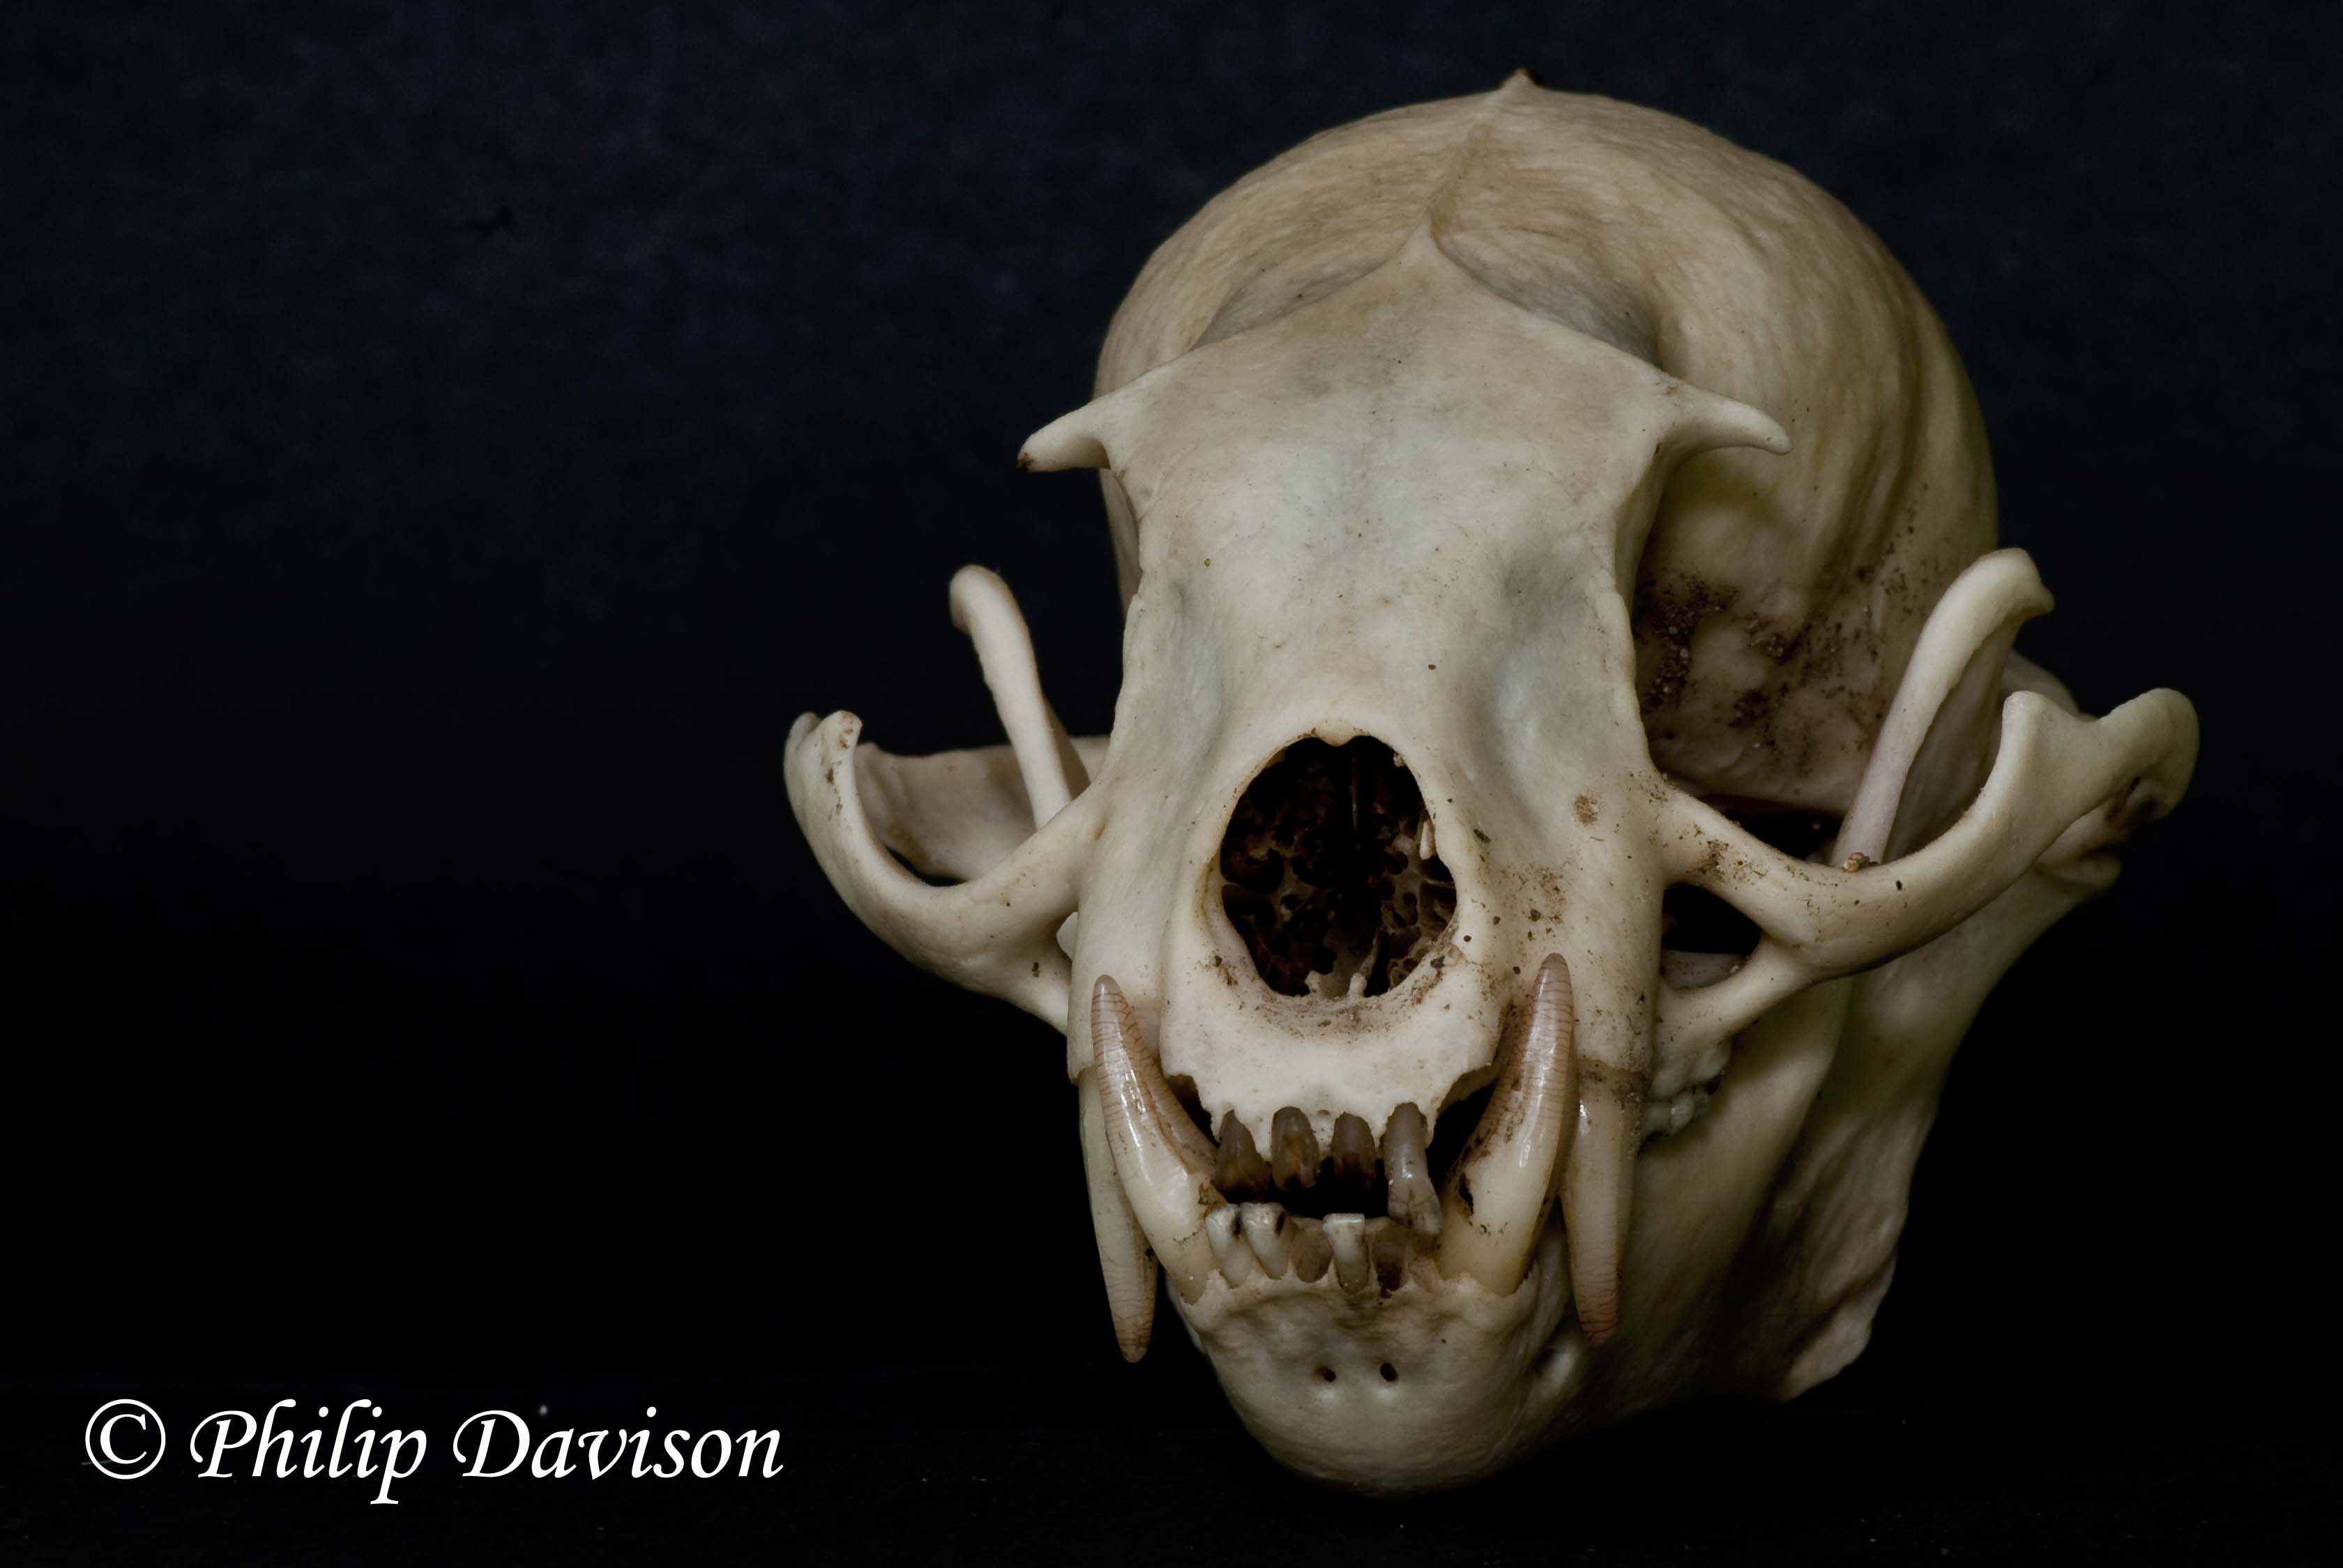 The reptilian skull ridge